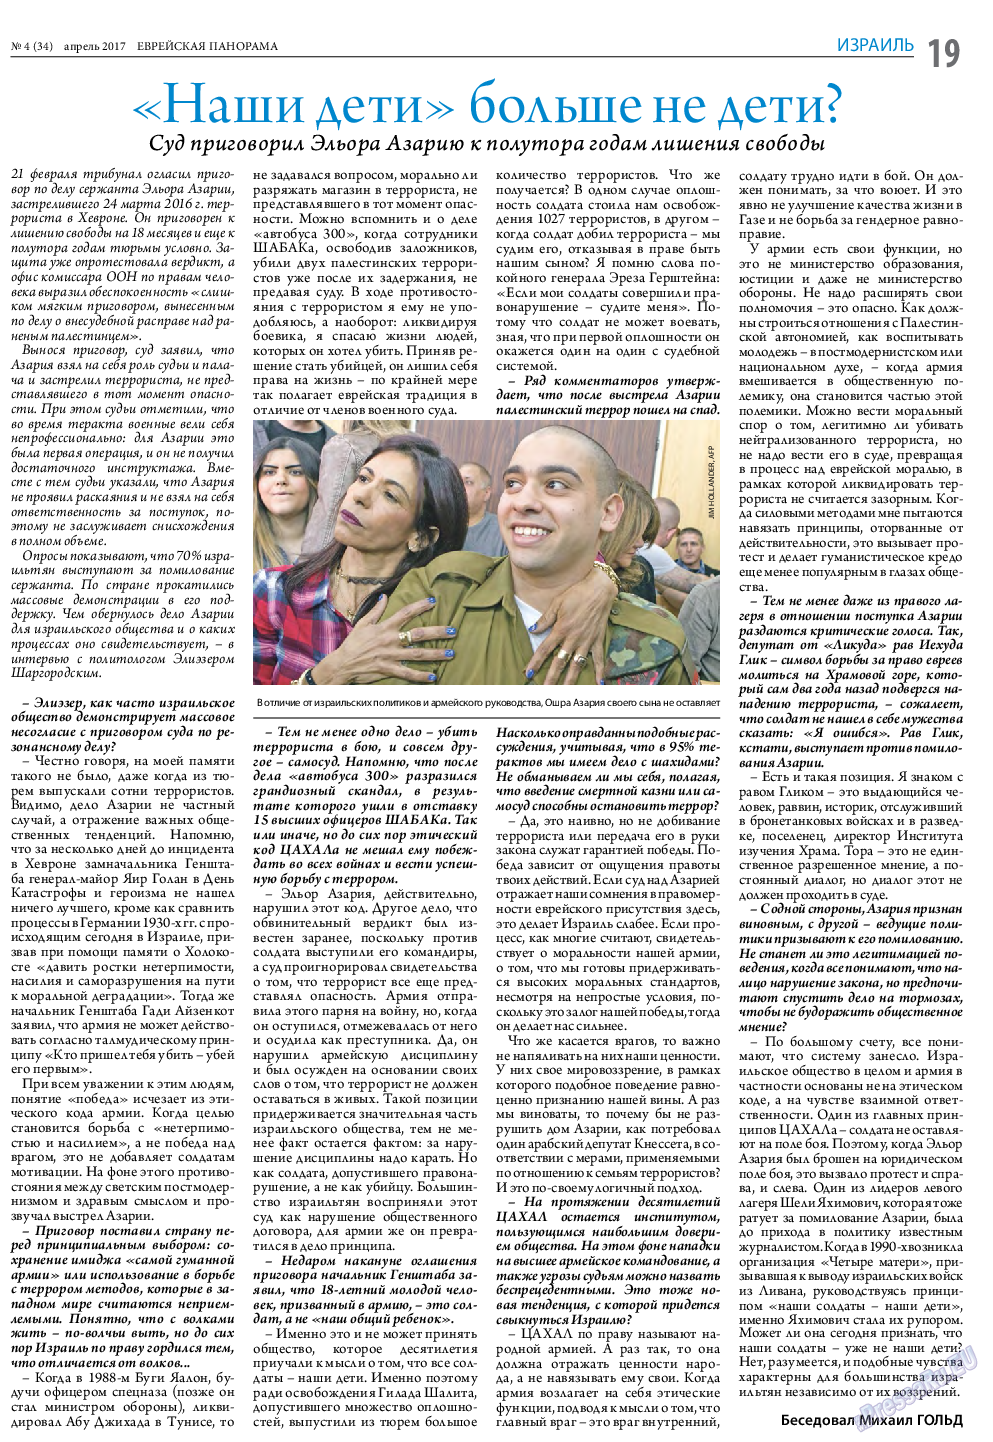 Еврейская панорама, газета. 2017 №4 стр.19